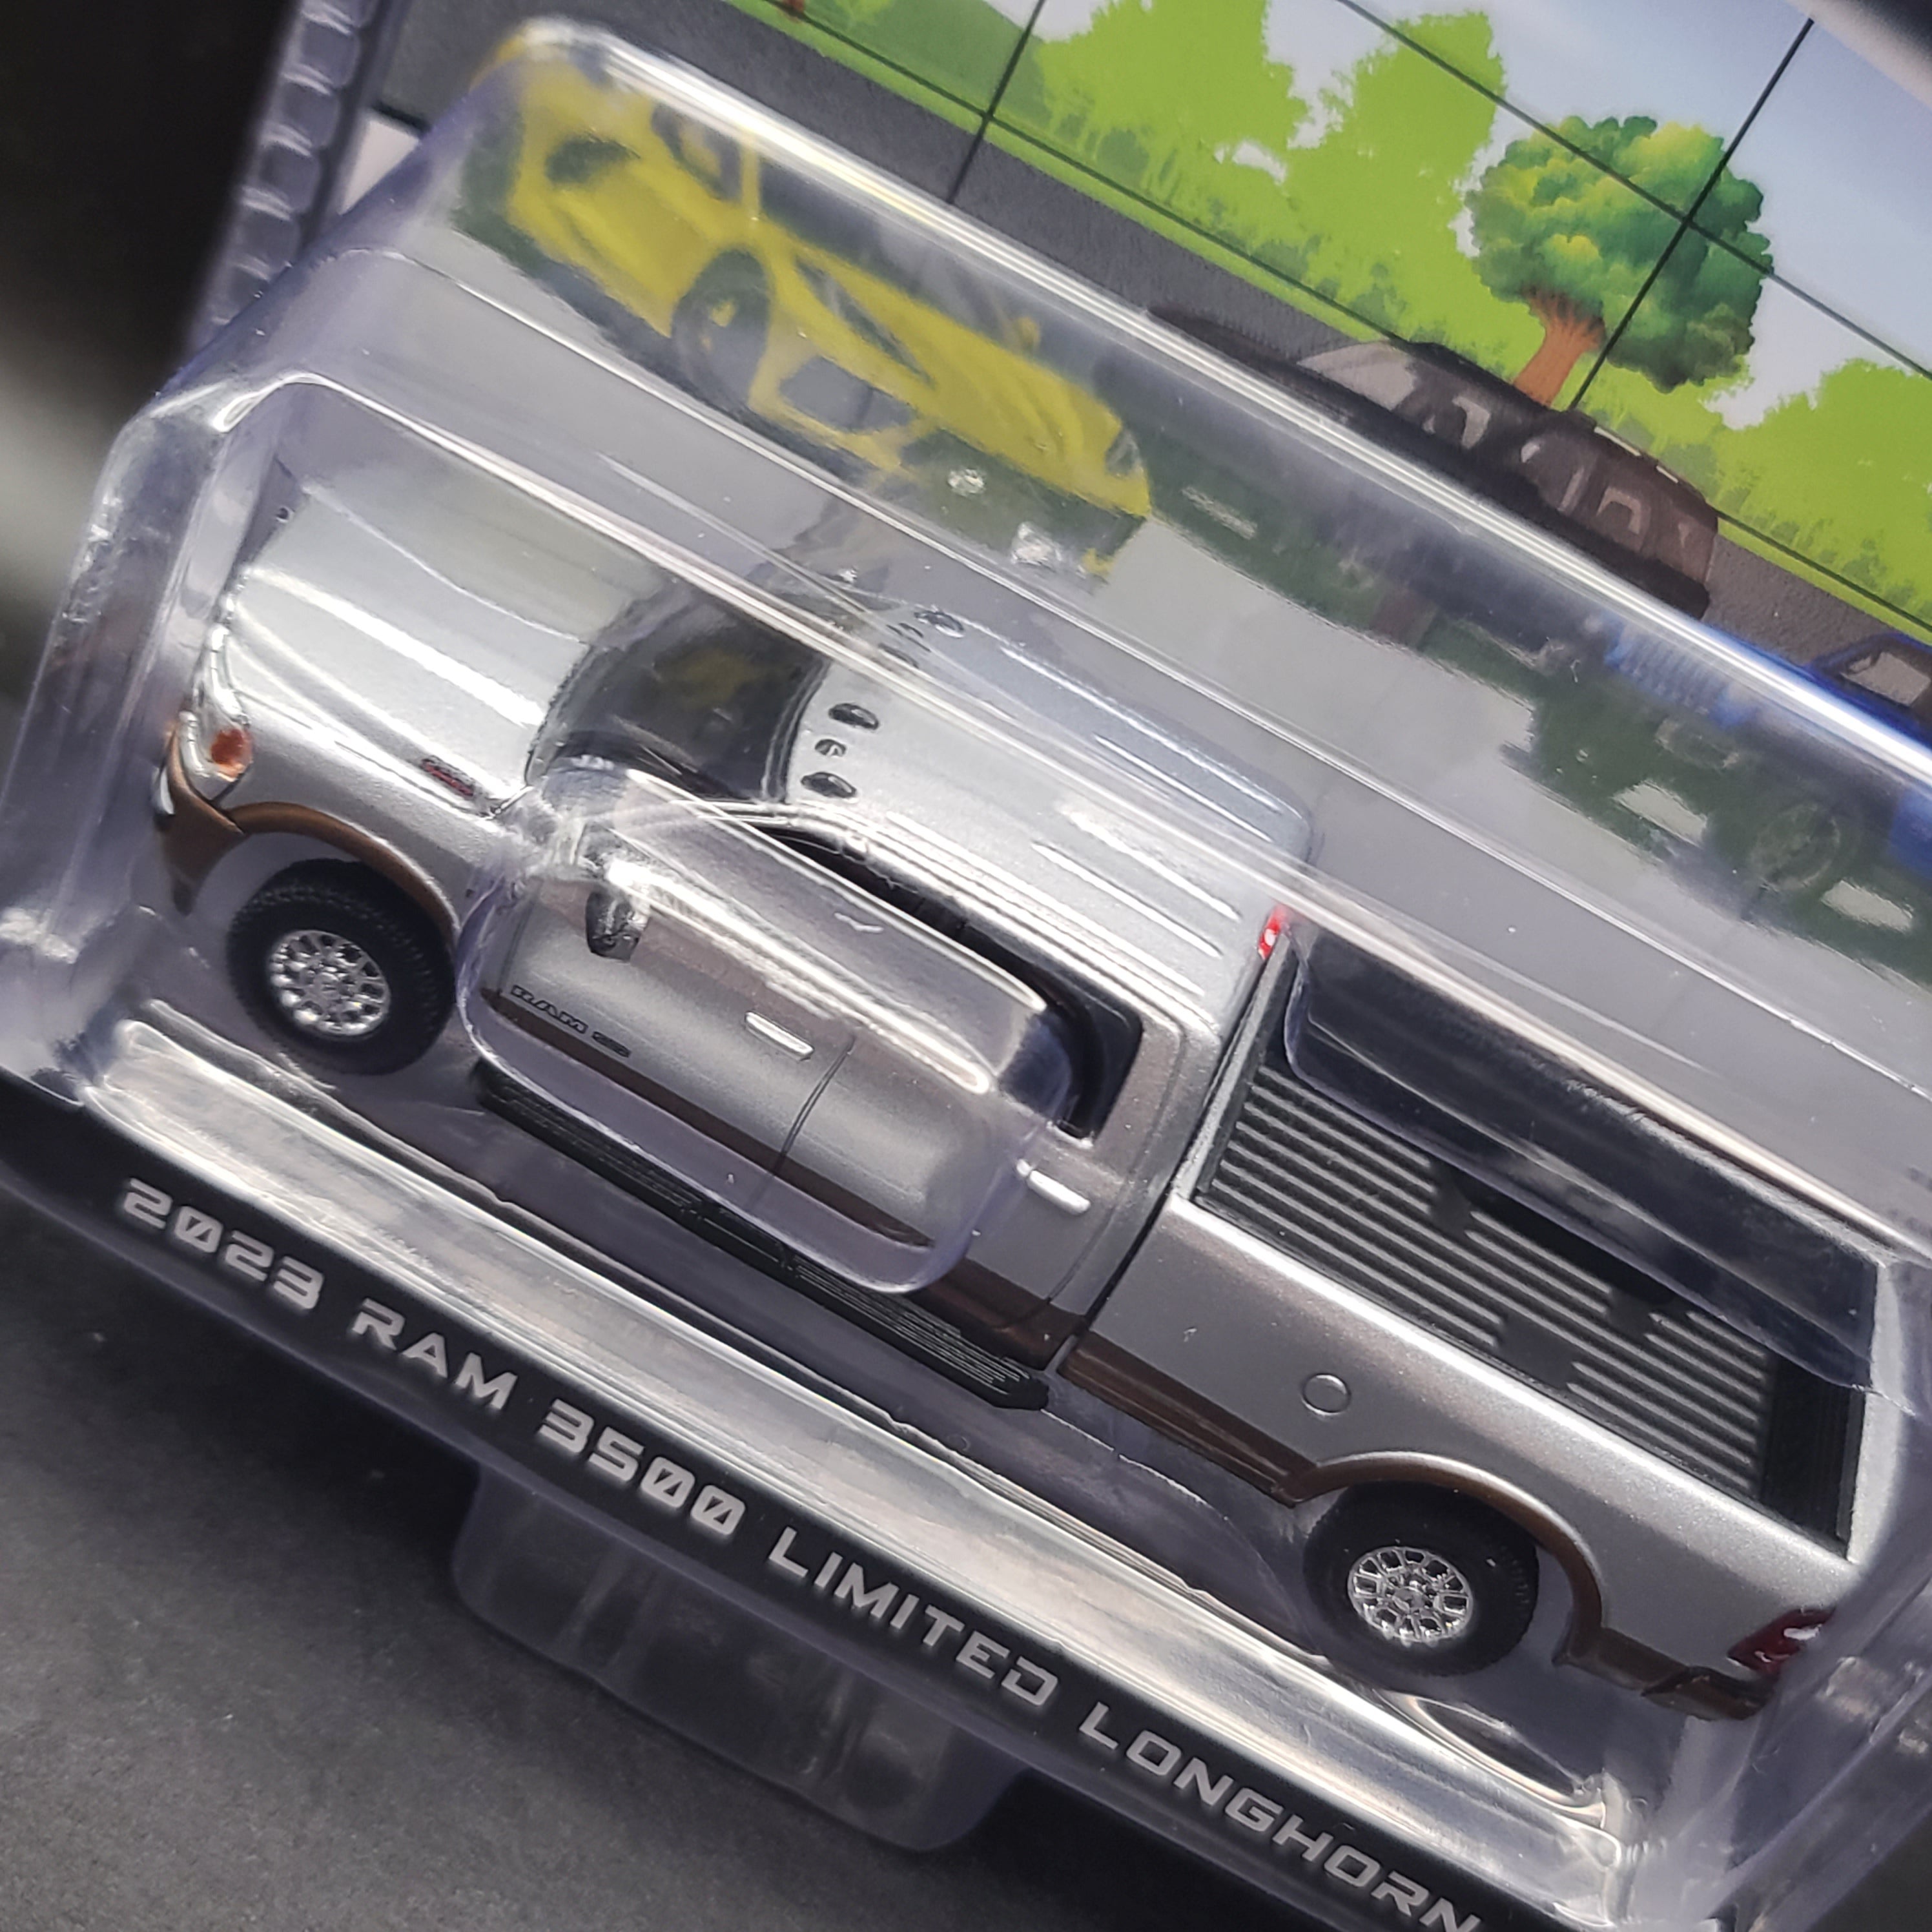 Greenlight '23 Ram 3500 Limited Longhorn Pick-up Truck - 1:64 scale (2024 Showroom Floor Series 4)